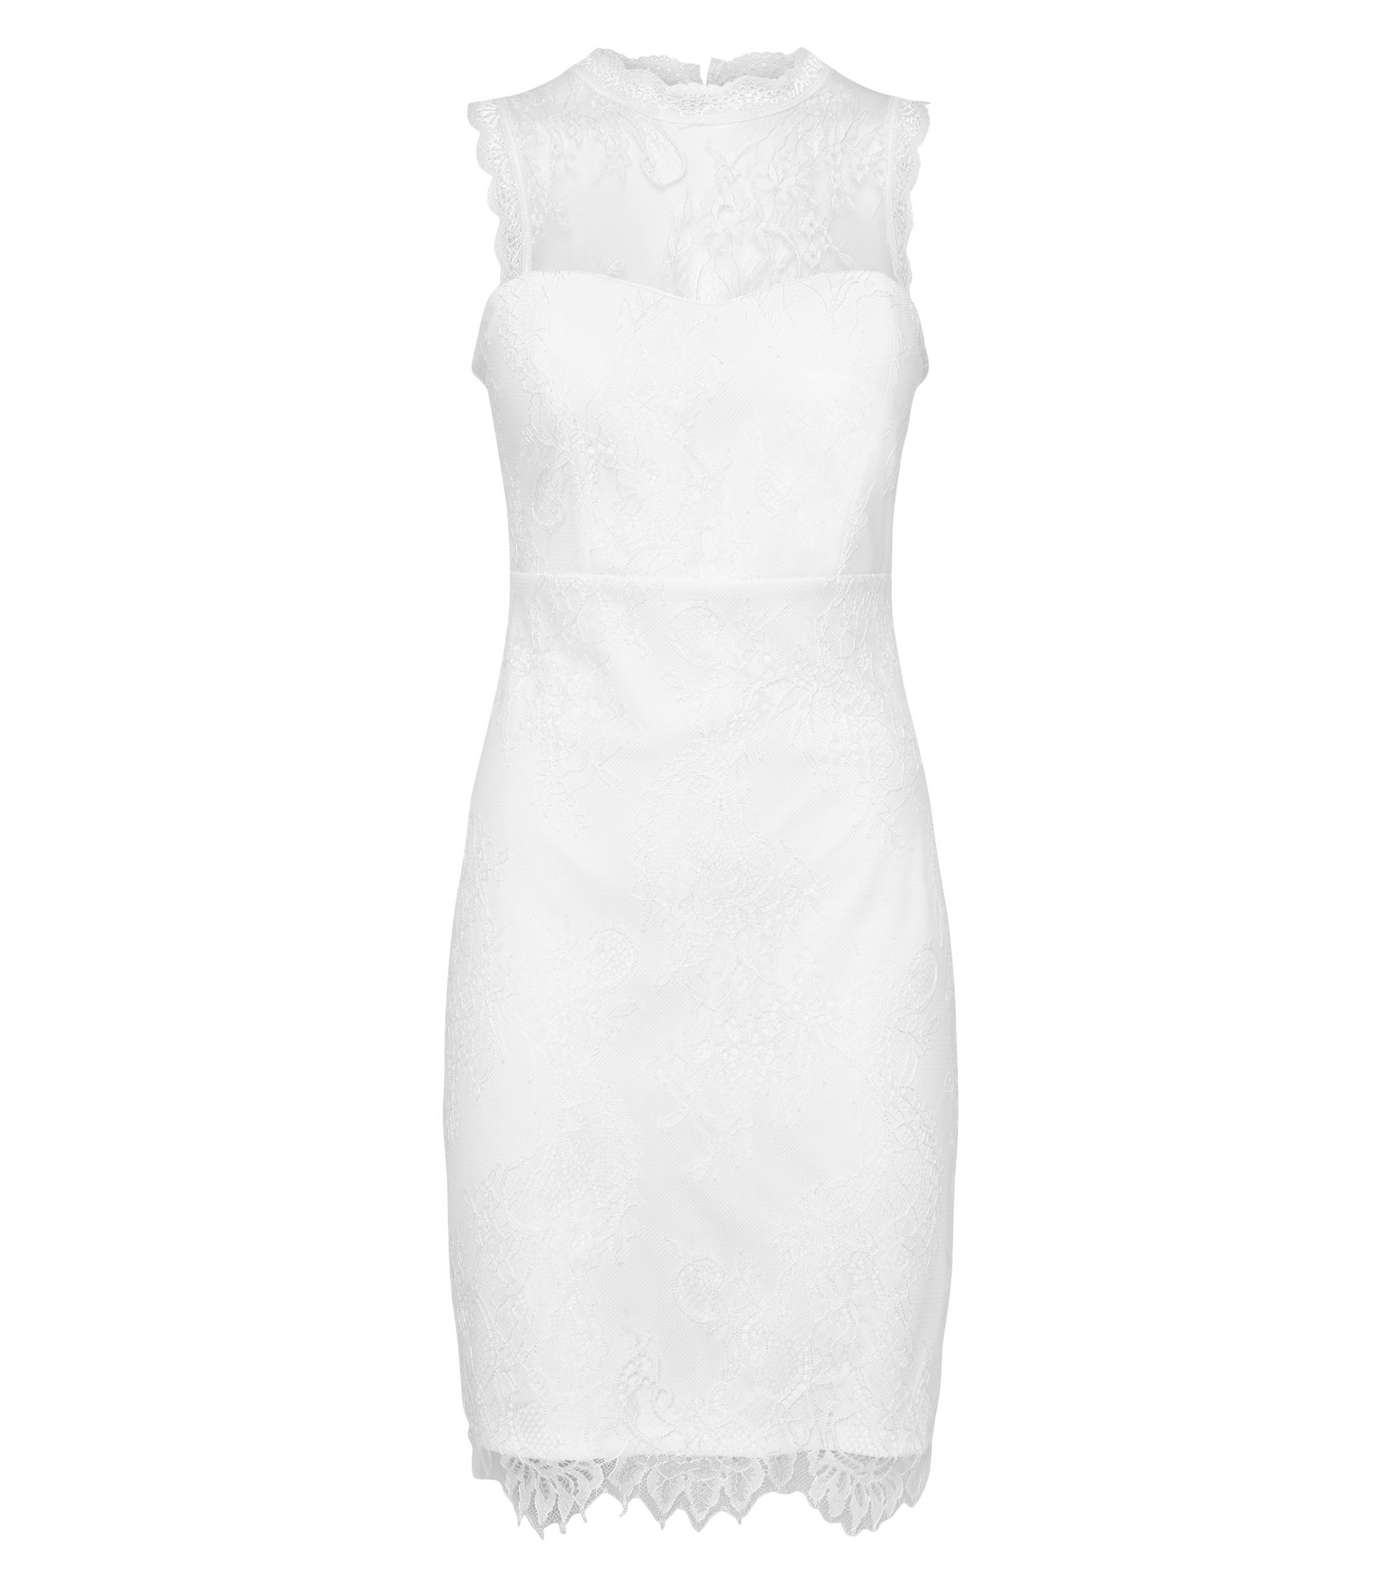 White Lace High Neck Bodycon Dress Image 4